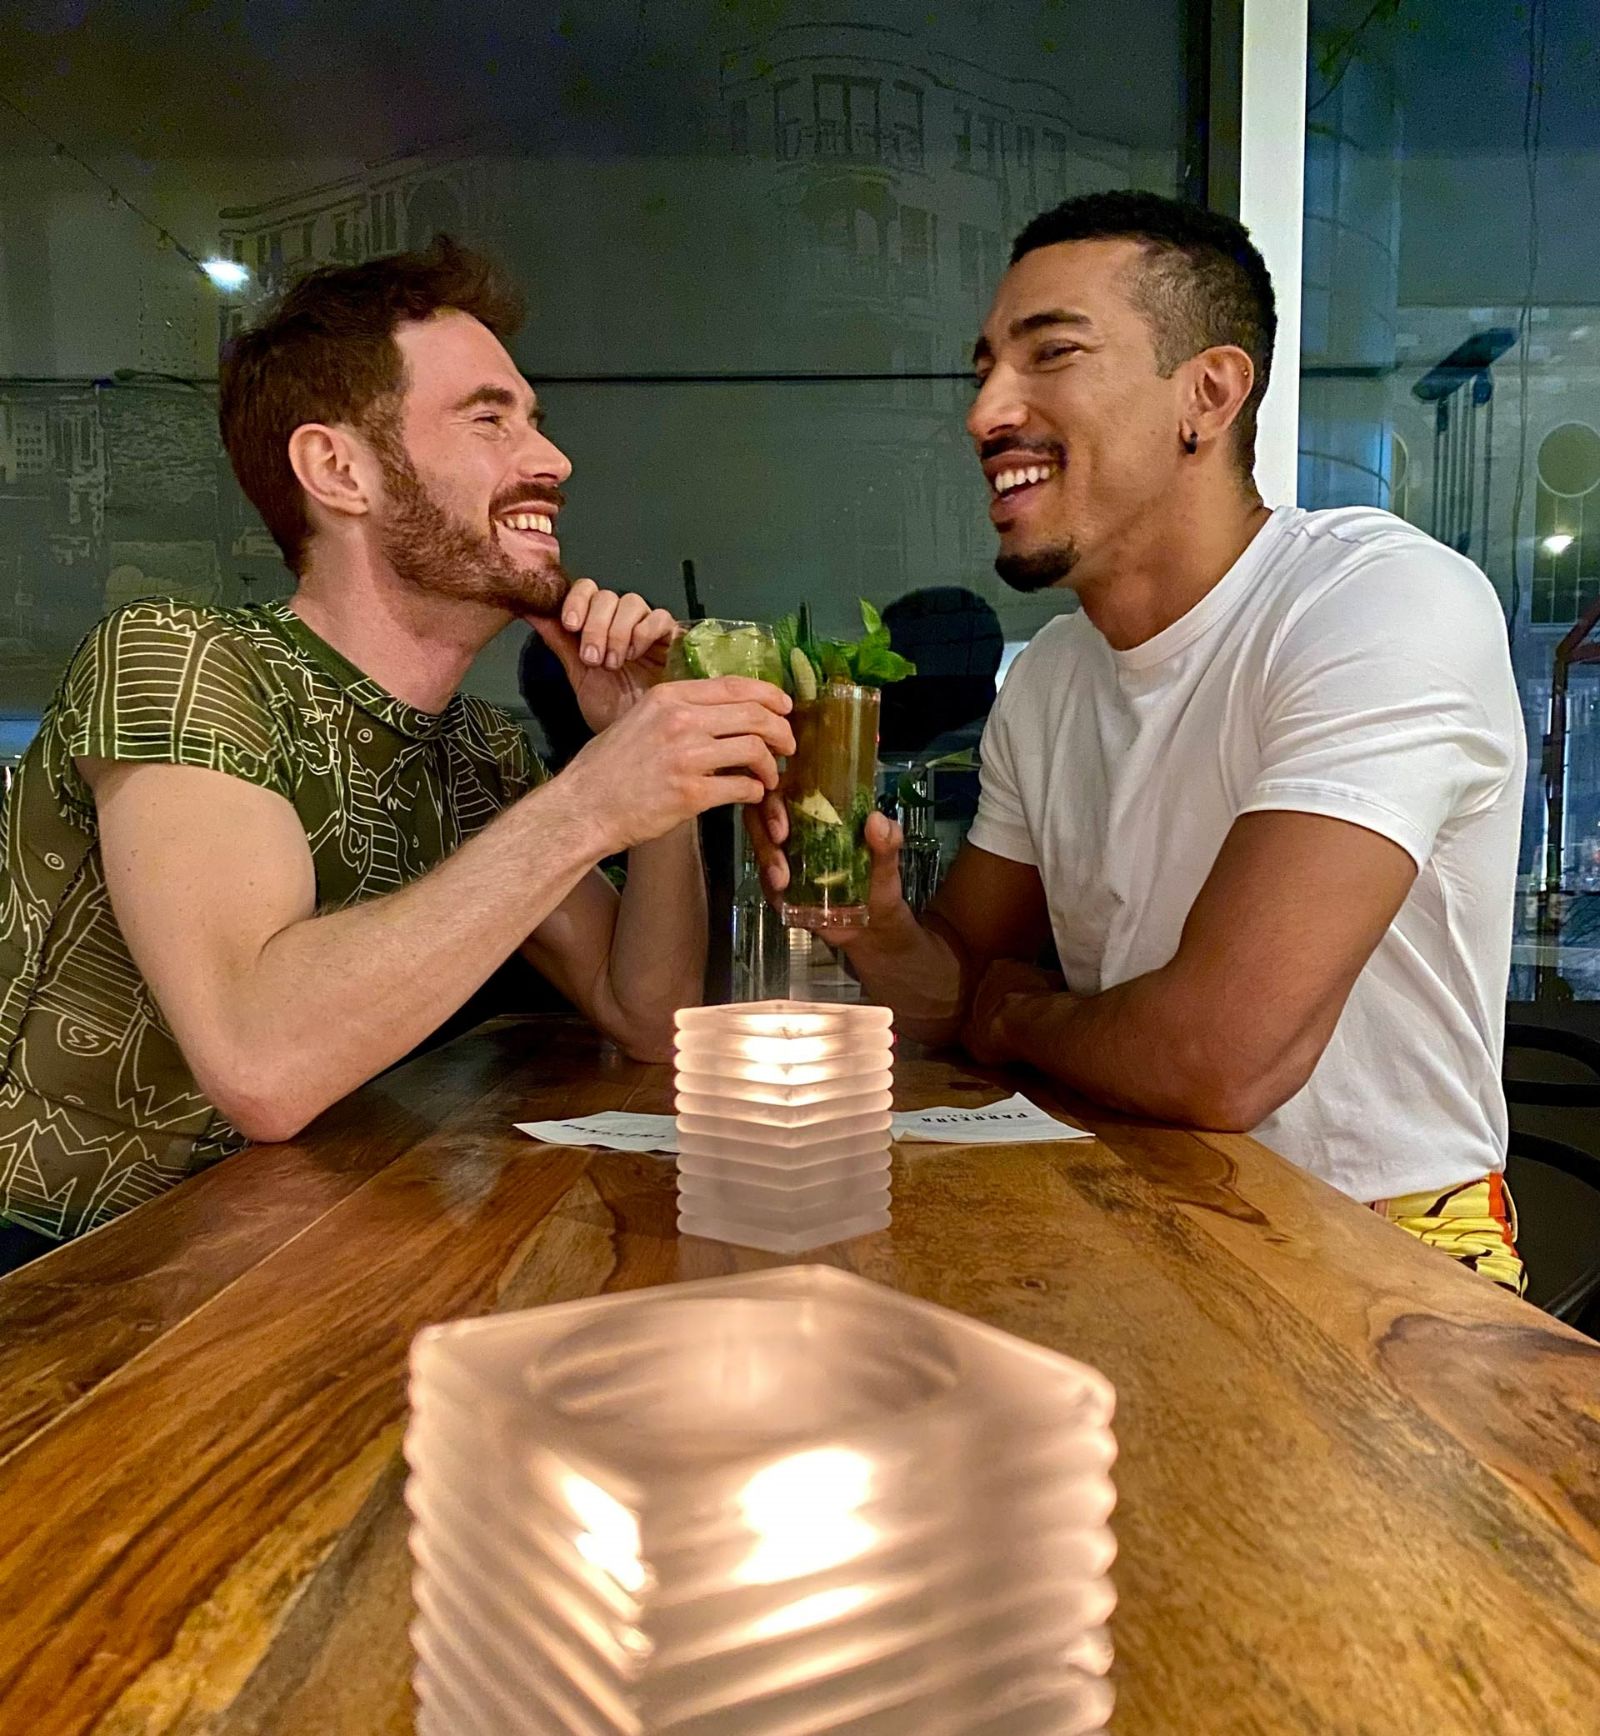 Montréal Gay Guide – Hotels, Bars, Saunas & Gay Village